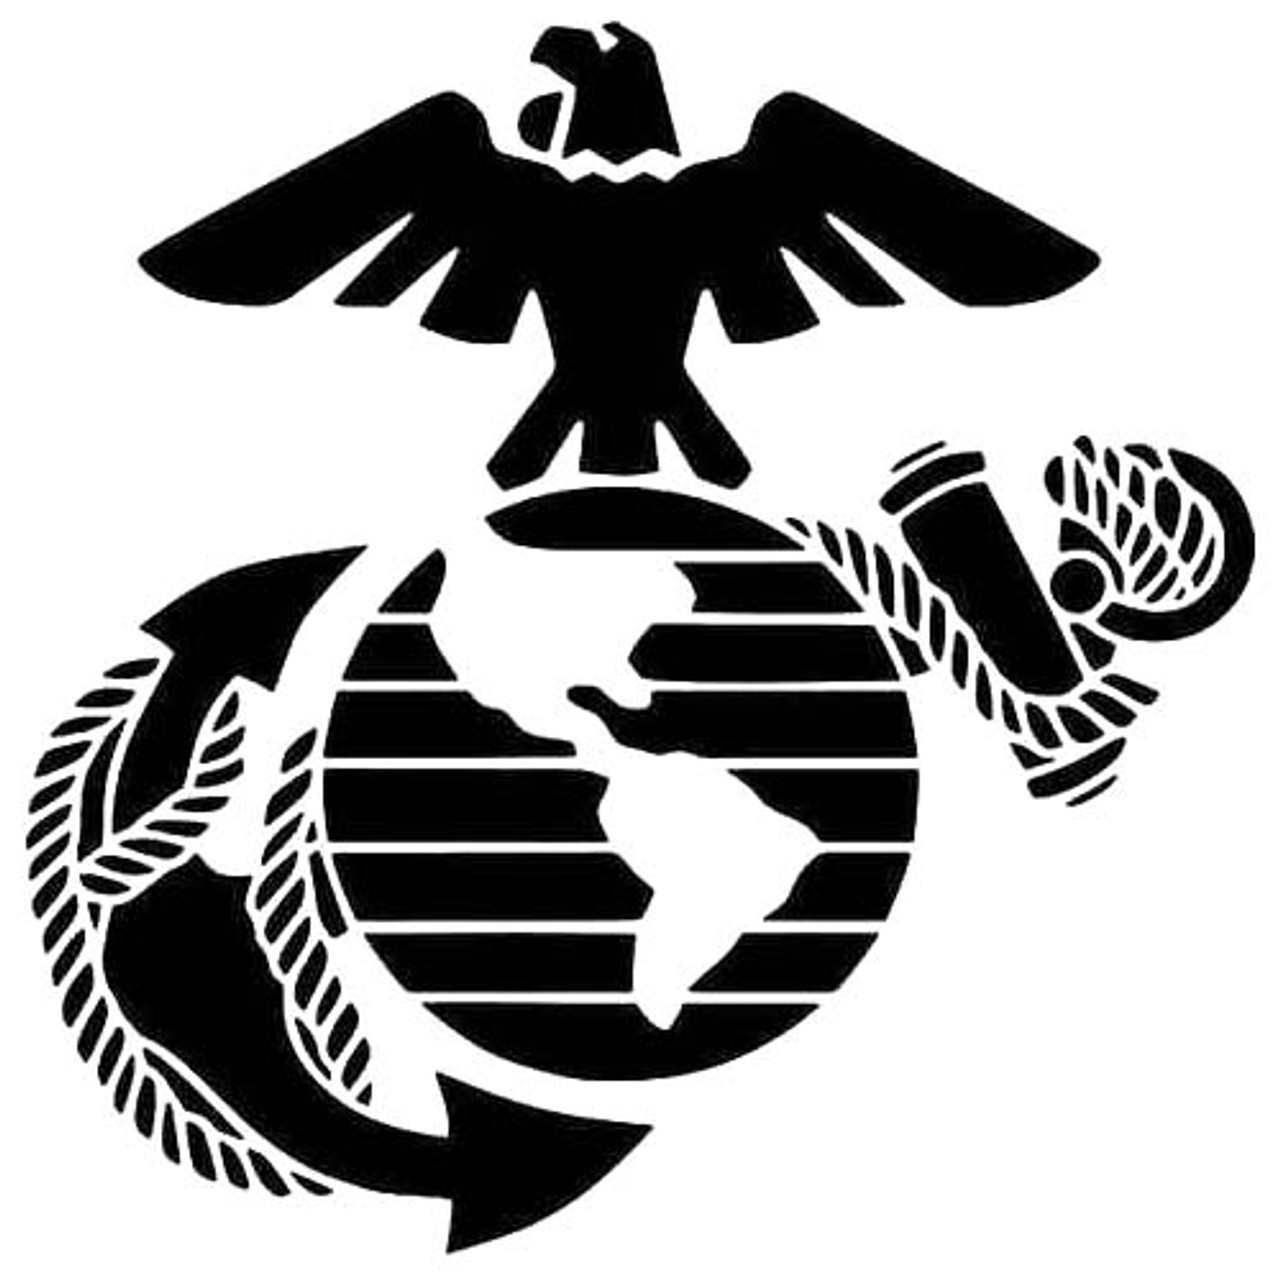 USMC Marines Corps Emblem 3 1506206242  67279.1604795888 ?c=2